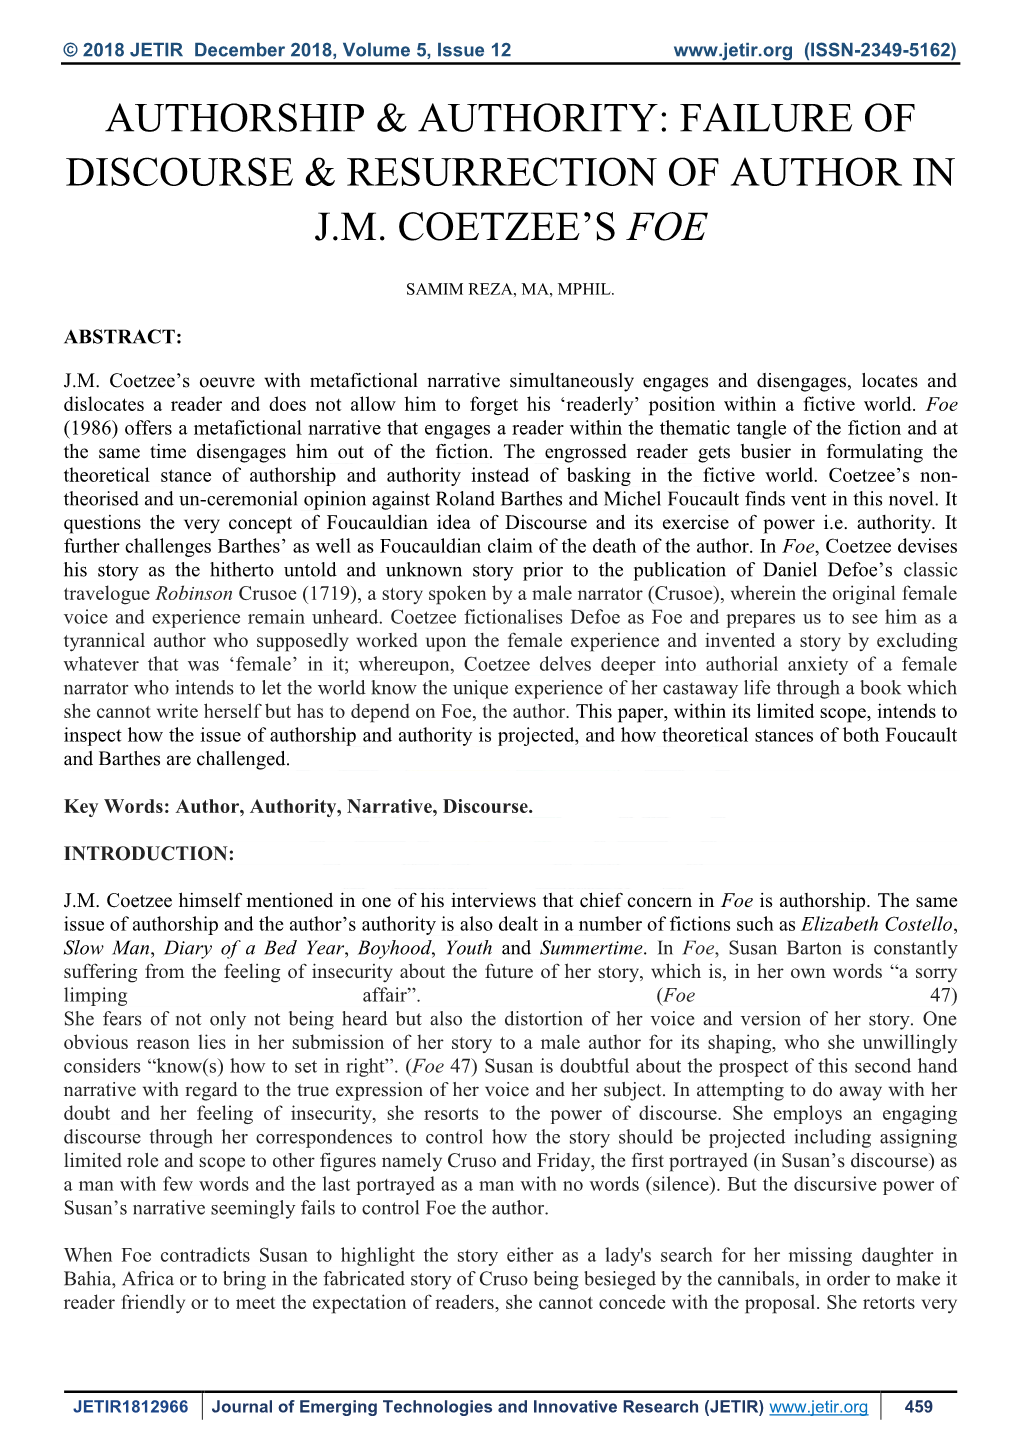 Authorship & Authority: Failure of Discourse & Resurrection of Author in J.M. Coetzee's